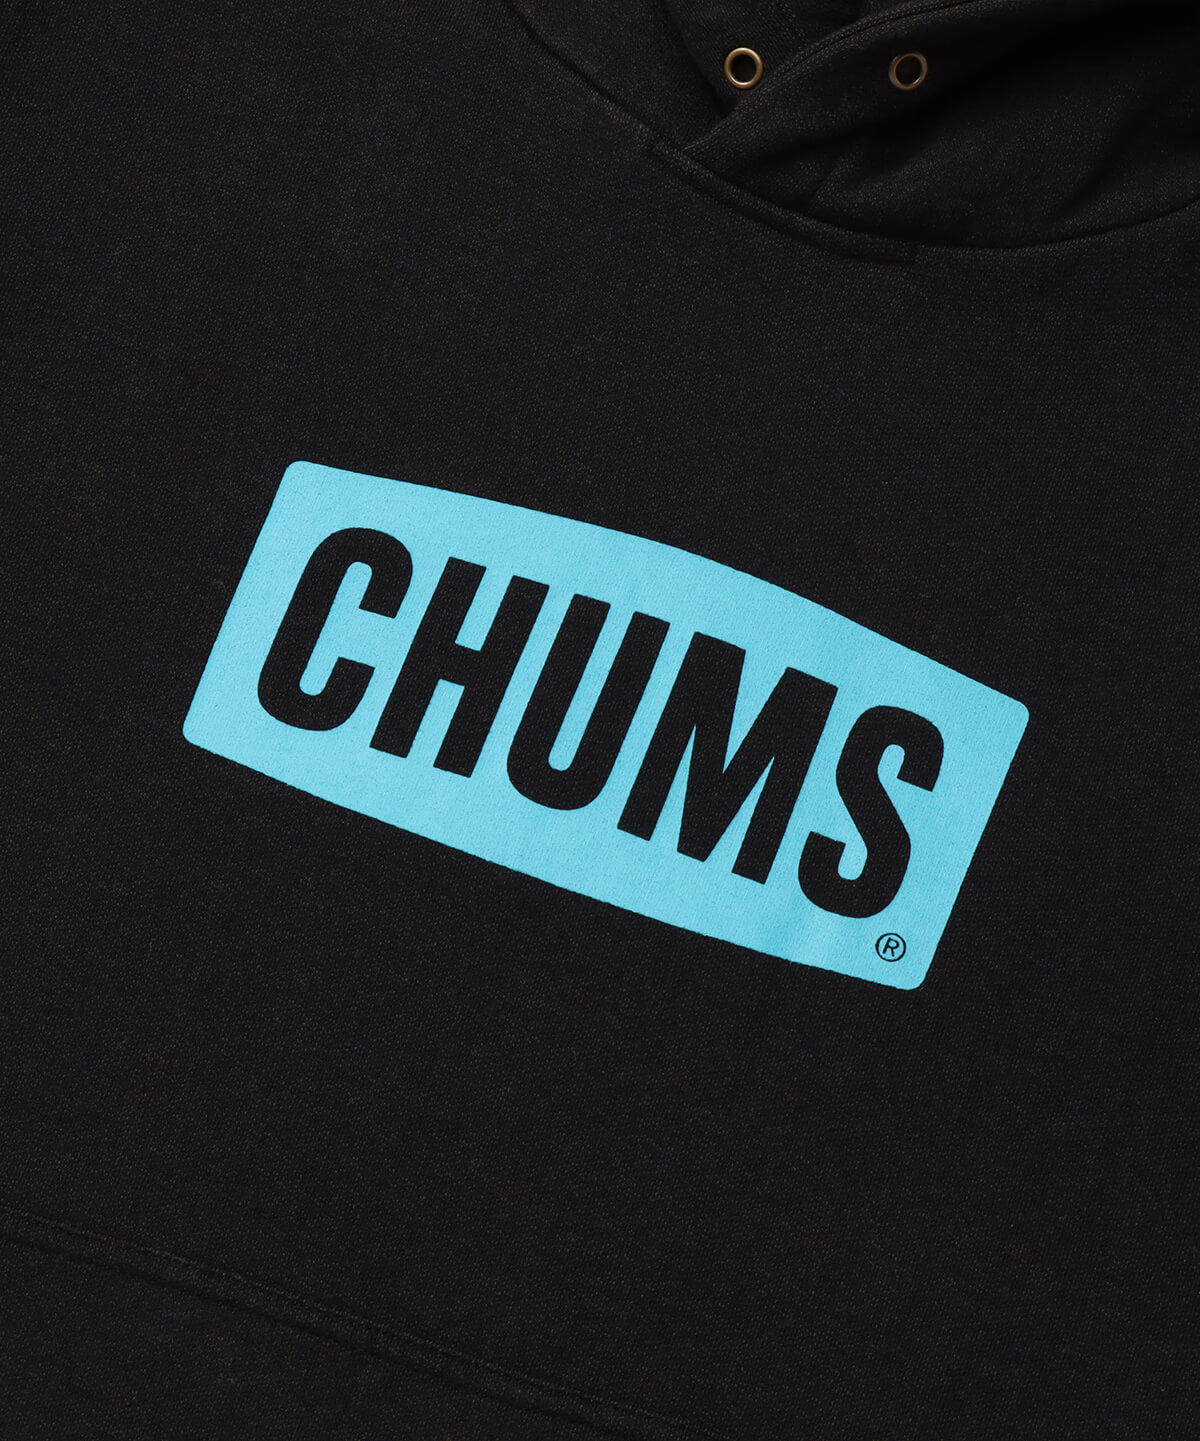 CHUMS Logo Pullover Parka(チャムスロゴプルオーバーパーカー(トップス/スウェット))